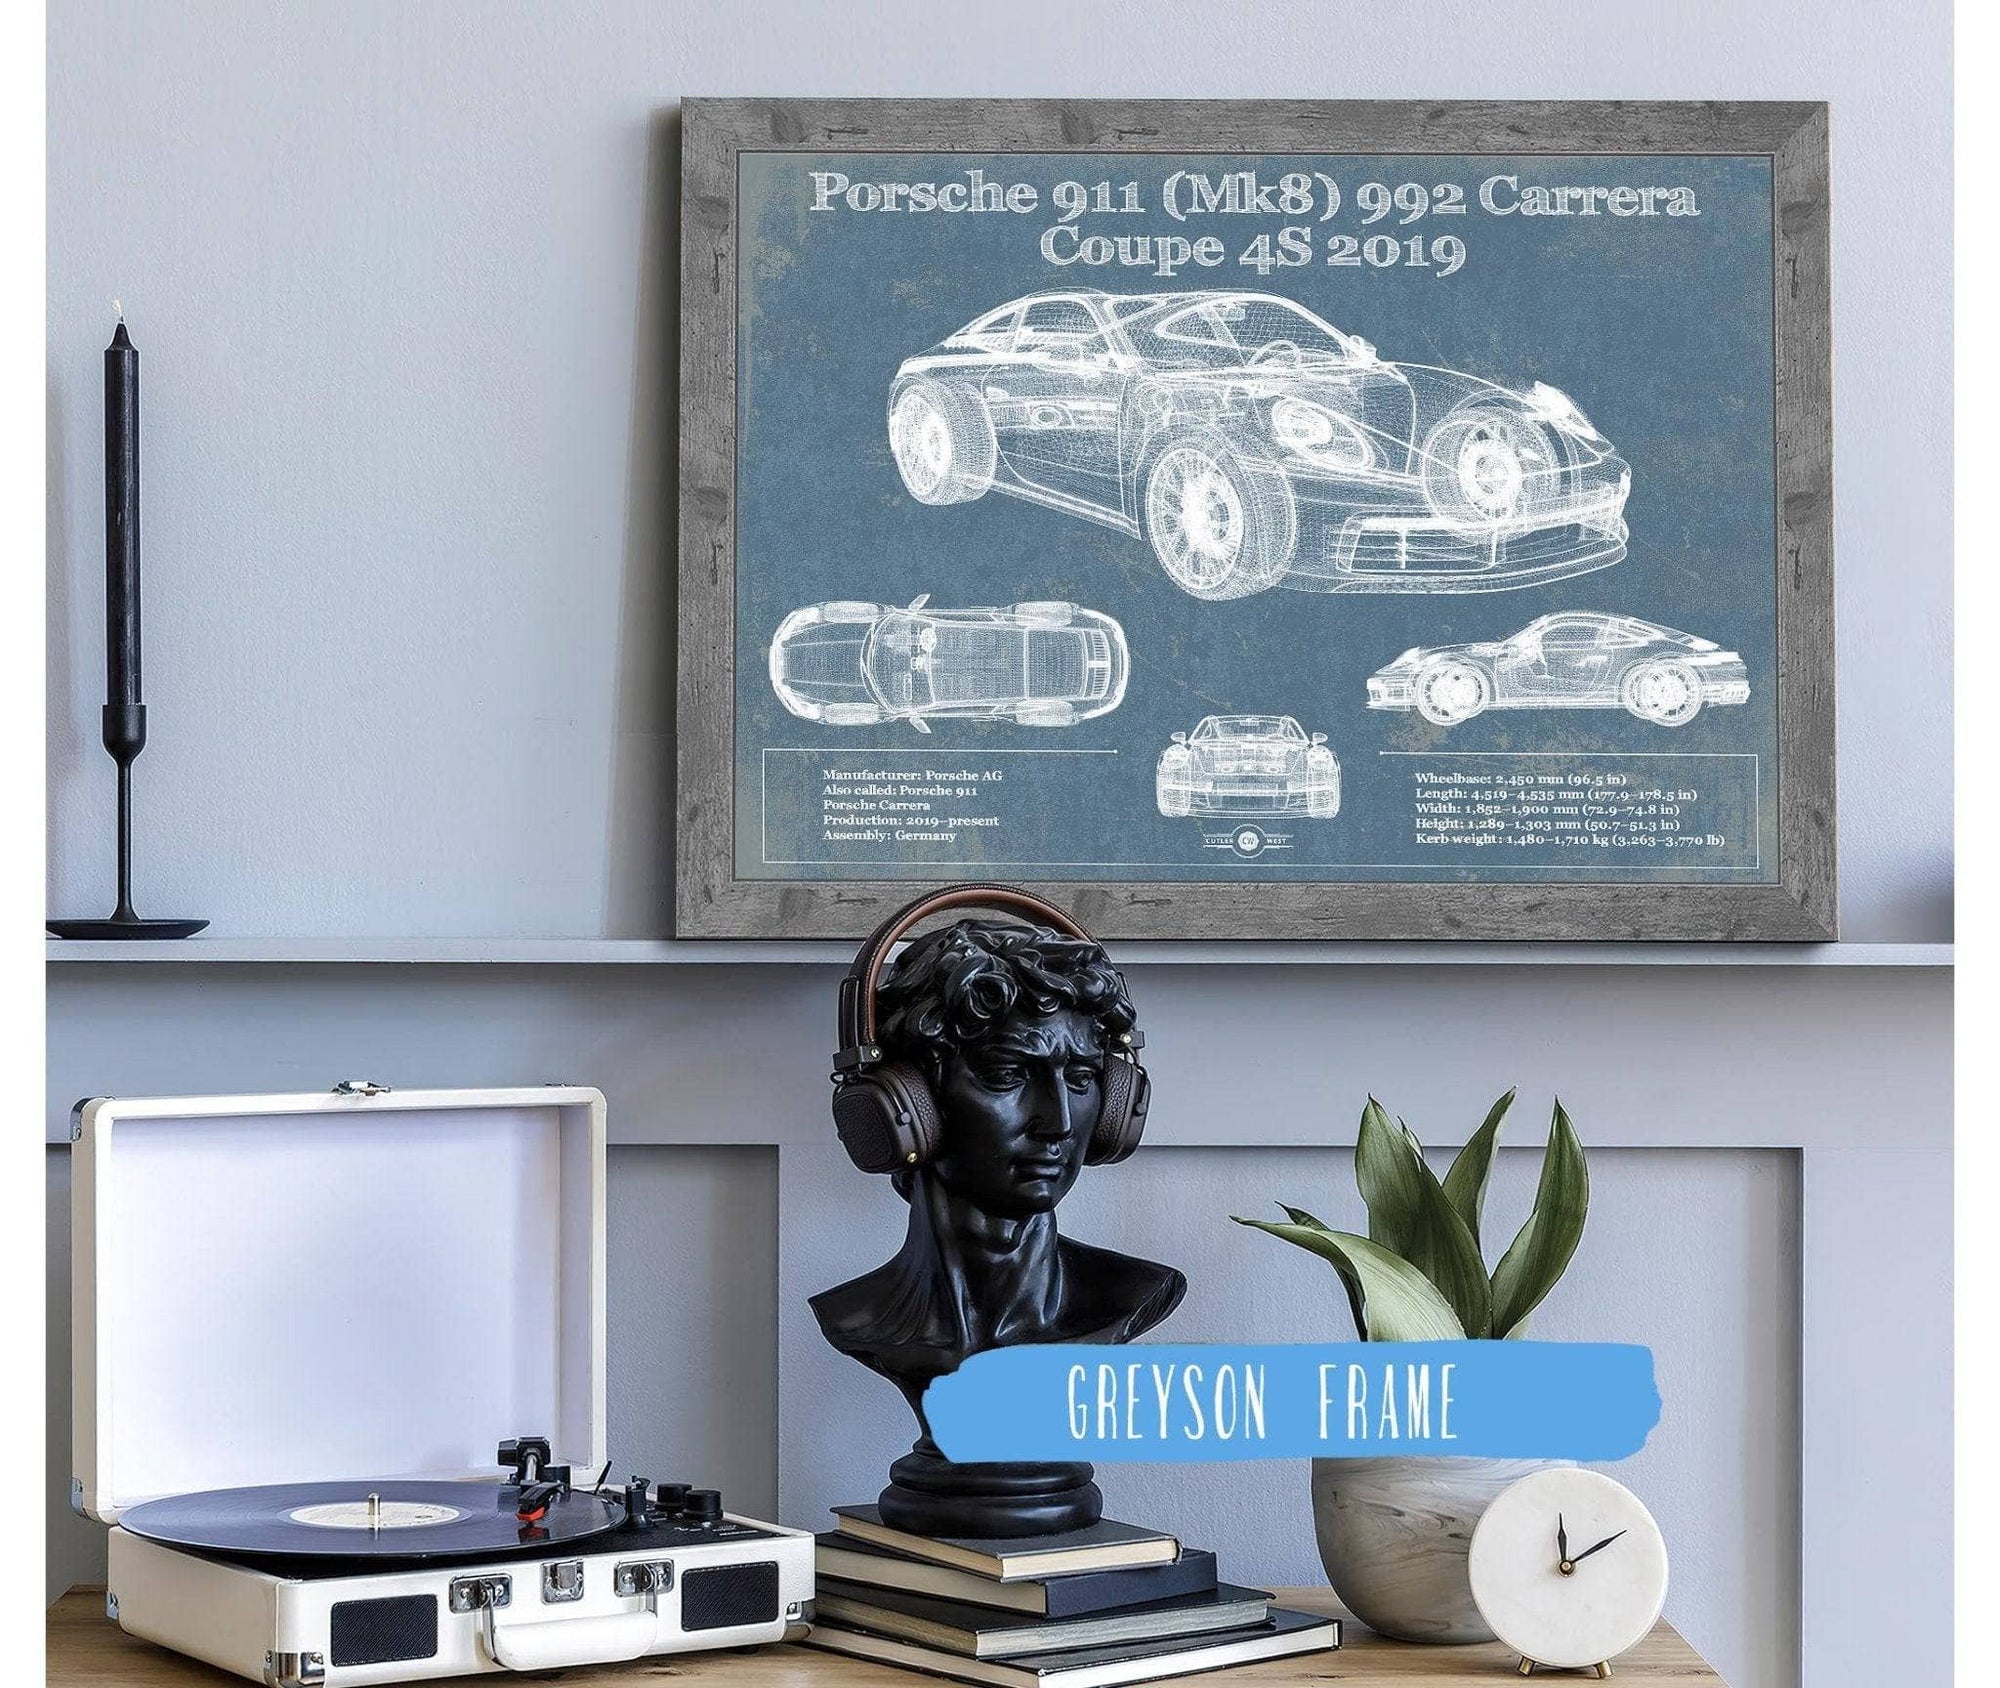 Cutler West Porsche Collection 14" x 11" / Greyson Frame Porsche 911 Mk8 992 Carrera Coupe 4s 2019 Vintage Blueprint Auto Print 845000299_68560